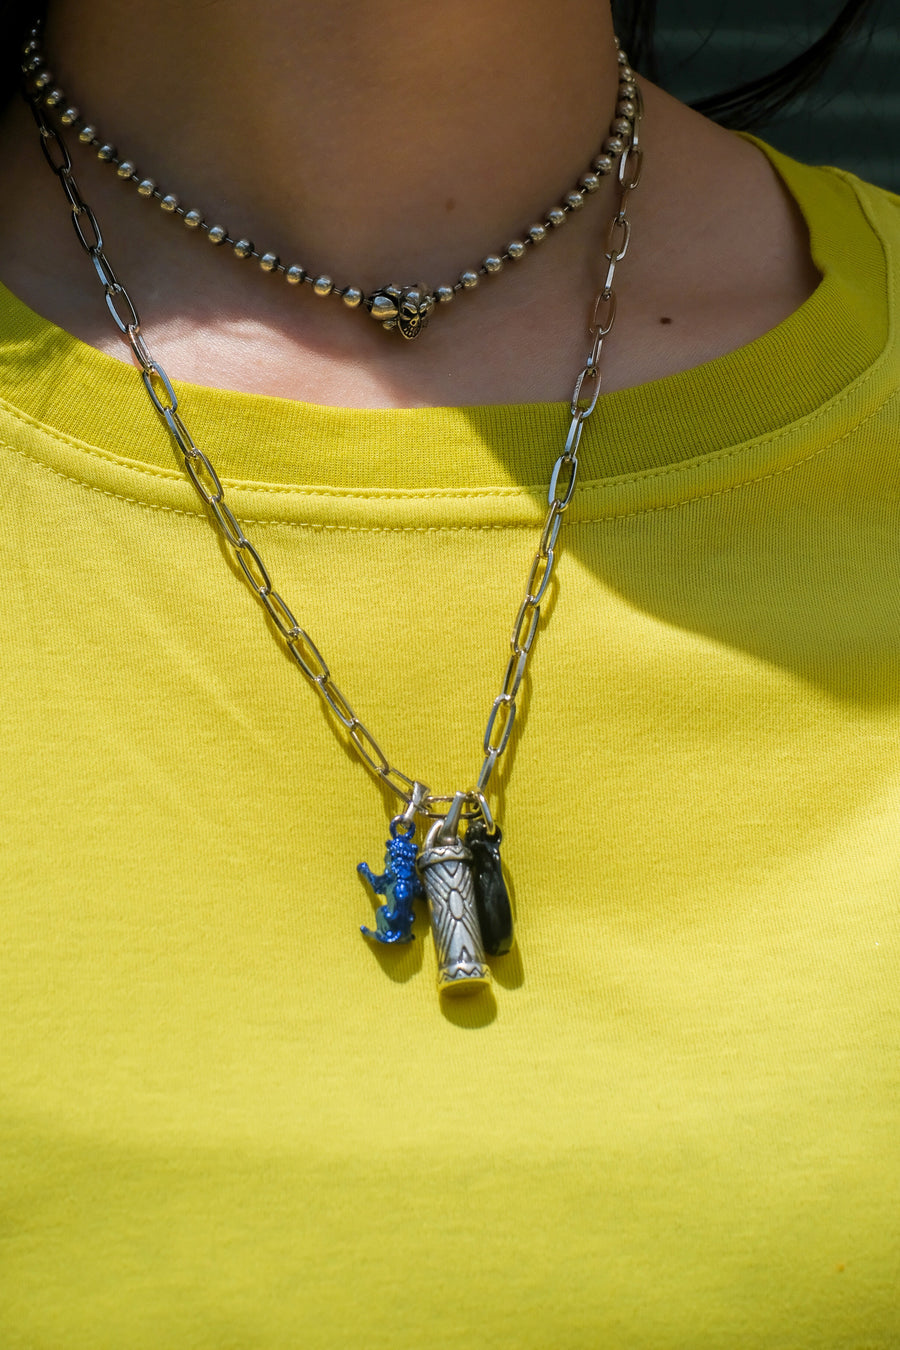 TOGA VIRILIS(トーガ ビリリース)22awのMotif necklace MIXの通販 